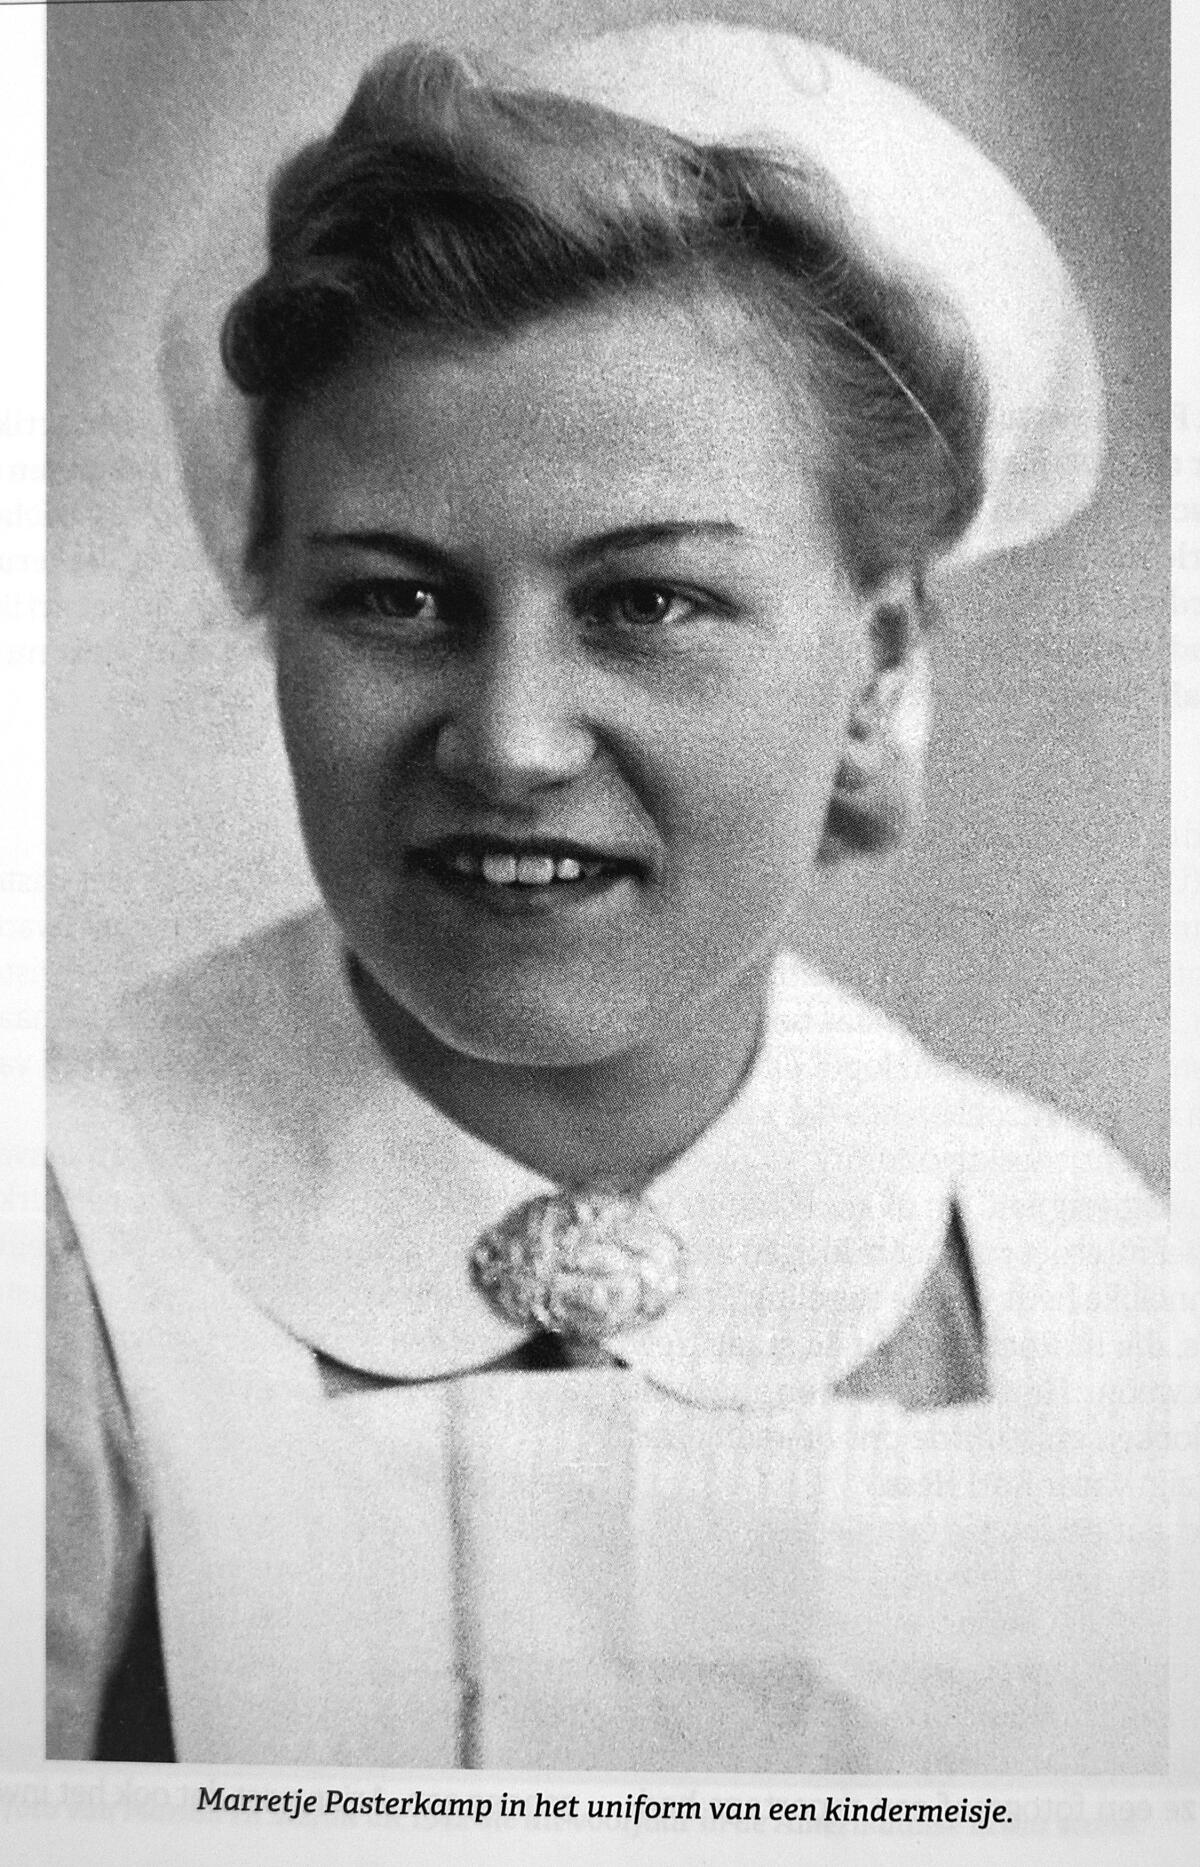 A portrait of a young Marretje Pasterkamp in nurse's cap.